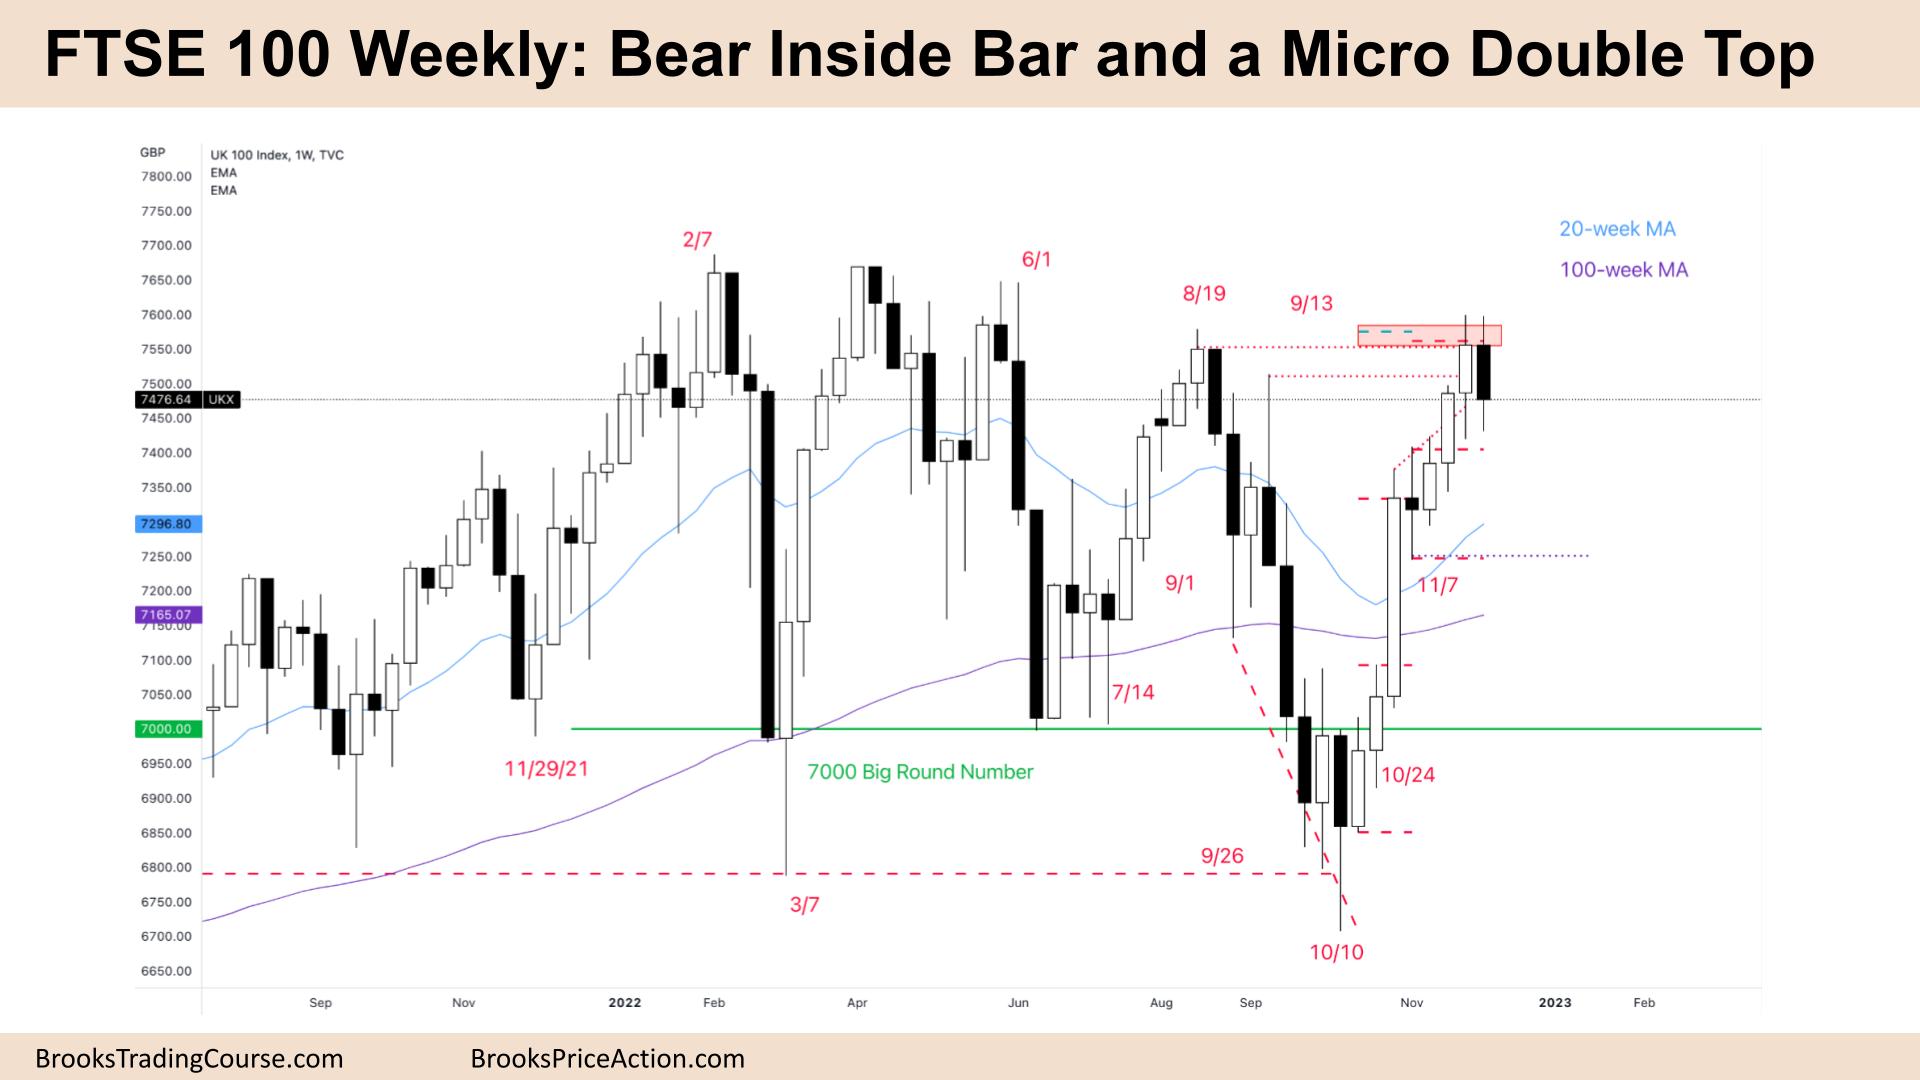 FTSE 100 Bear Inside Bar and a Micro Double Top
